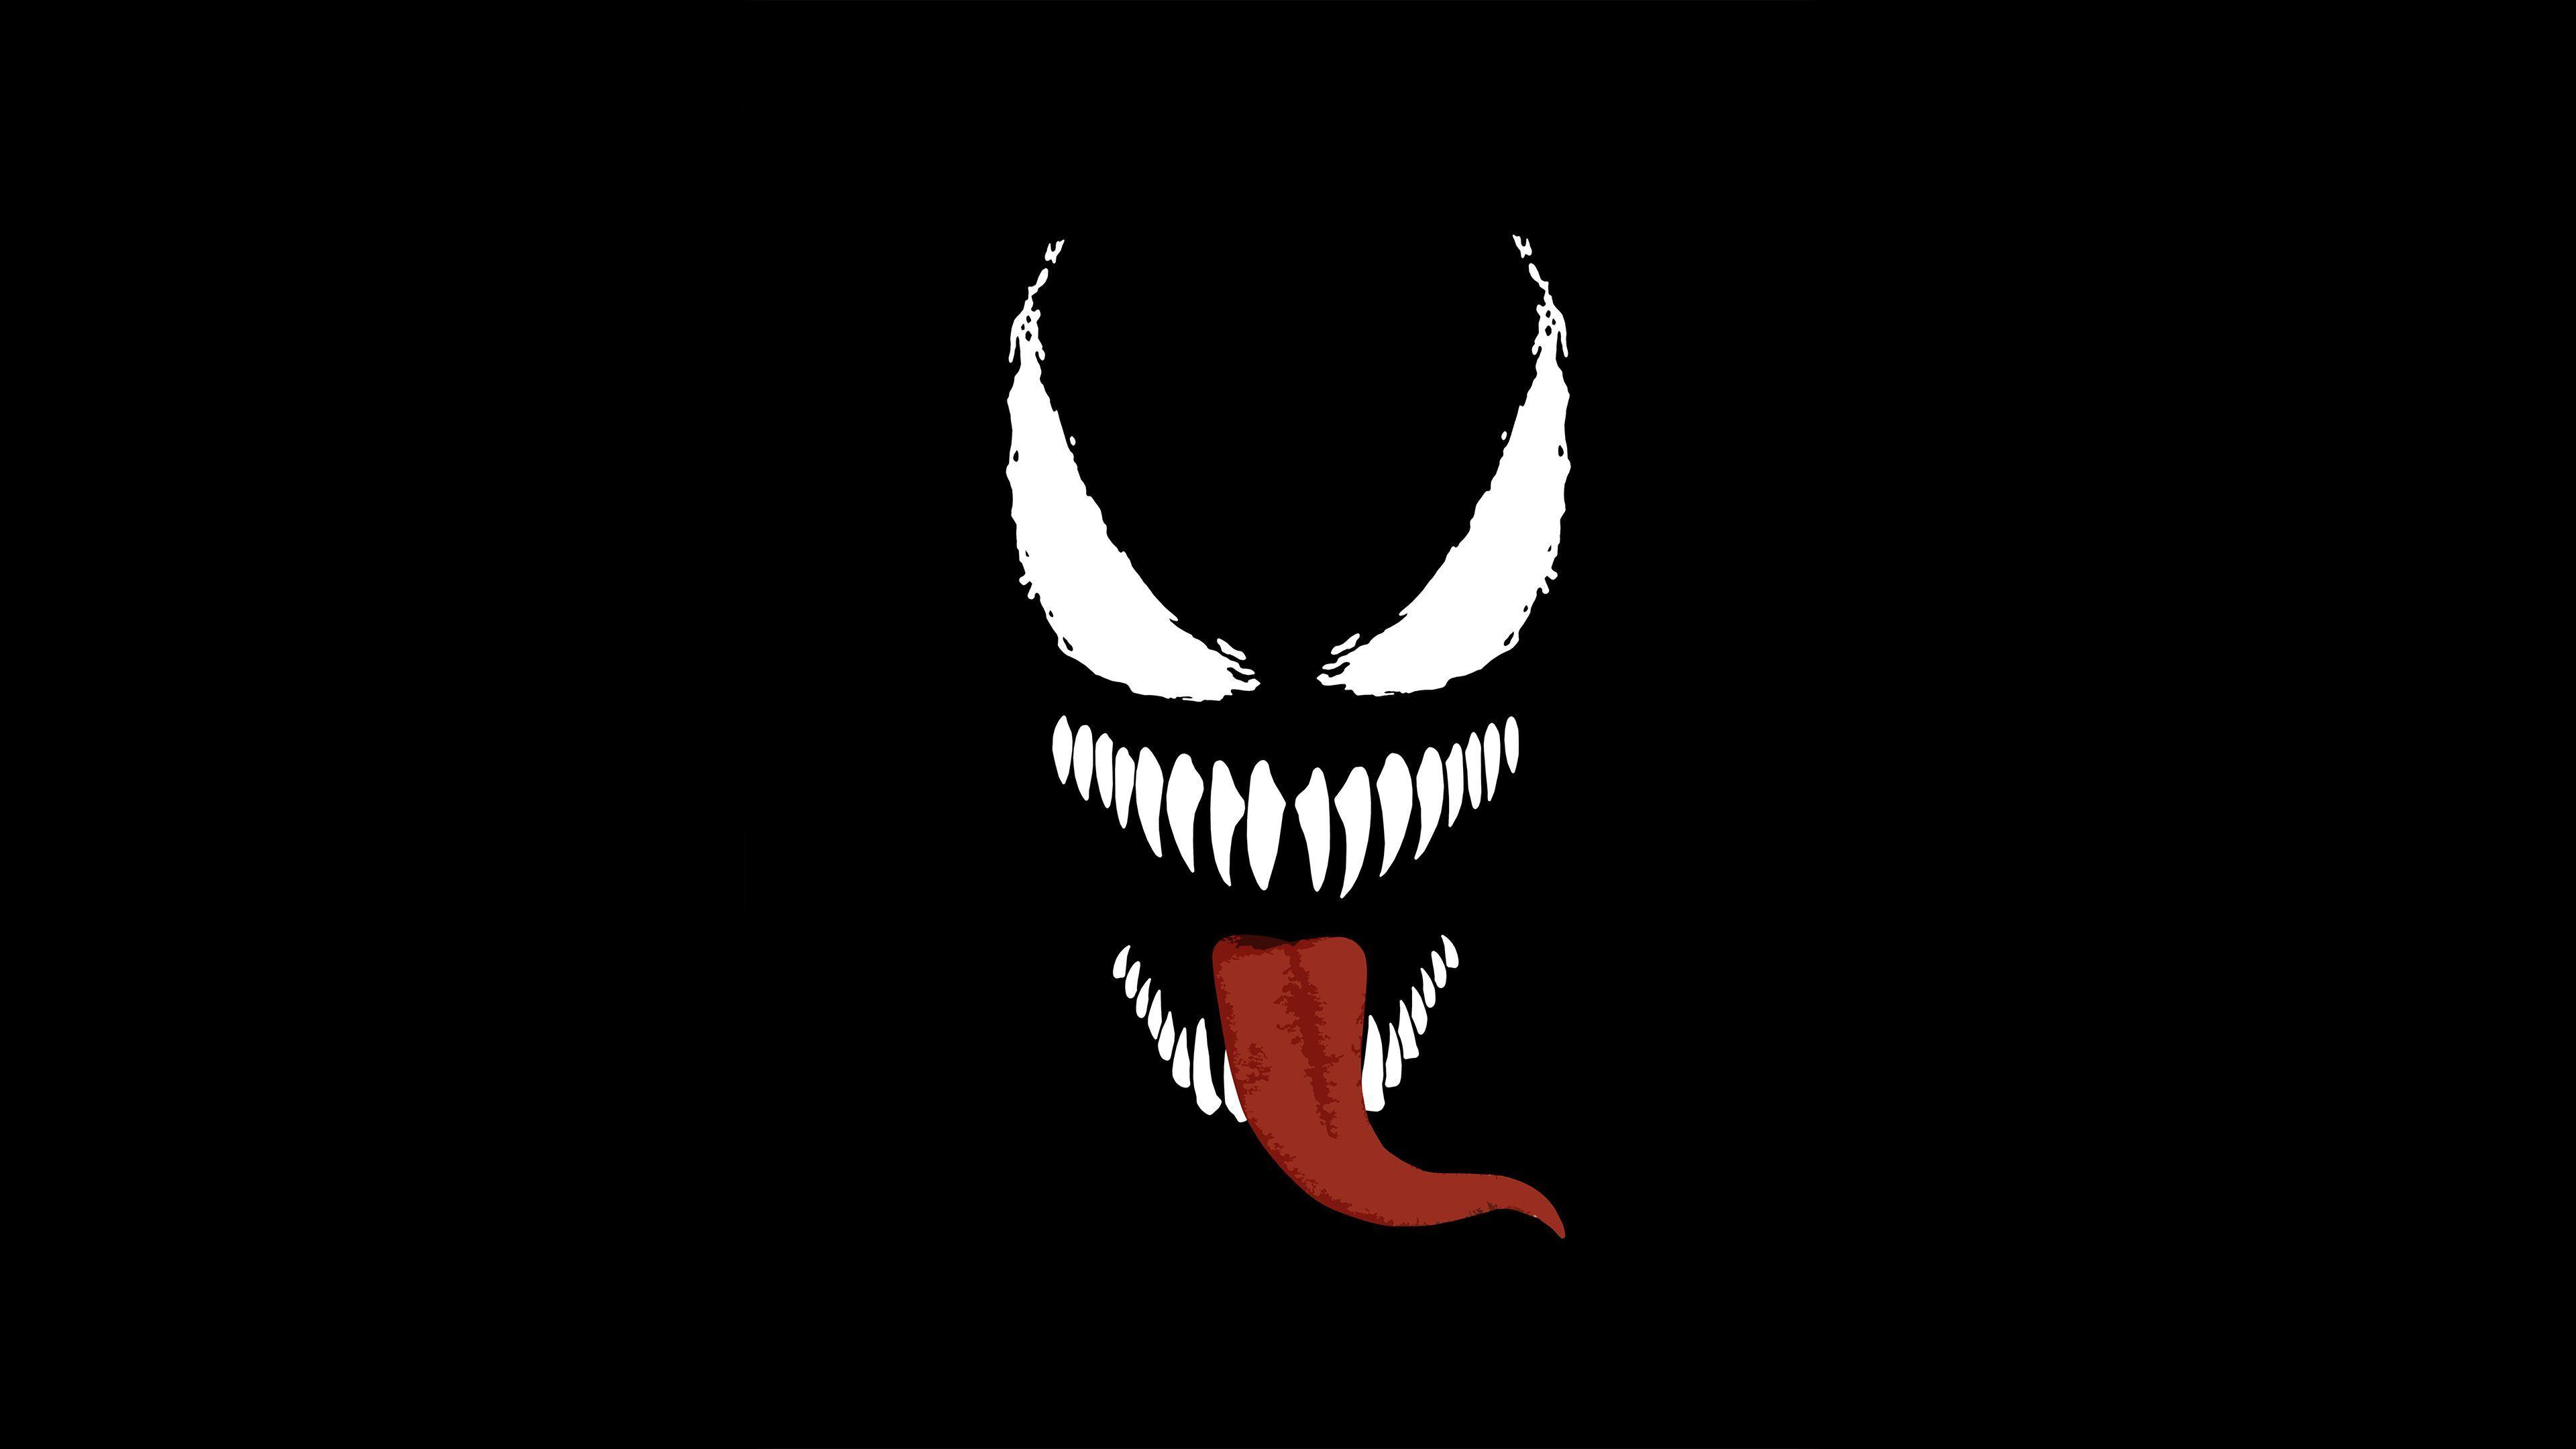 217 Wallpaper Hd Venom Logo Images - MyWeb